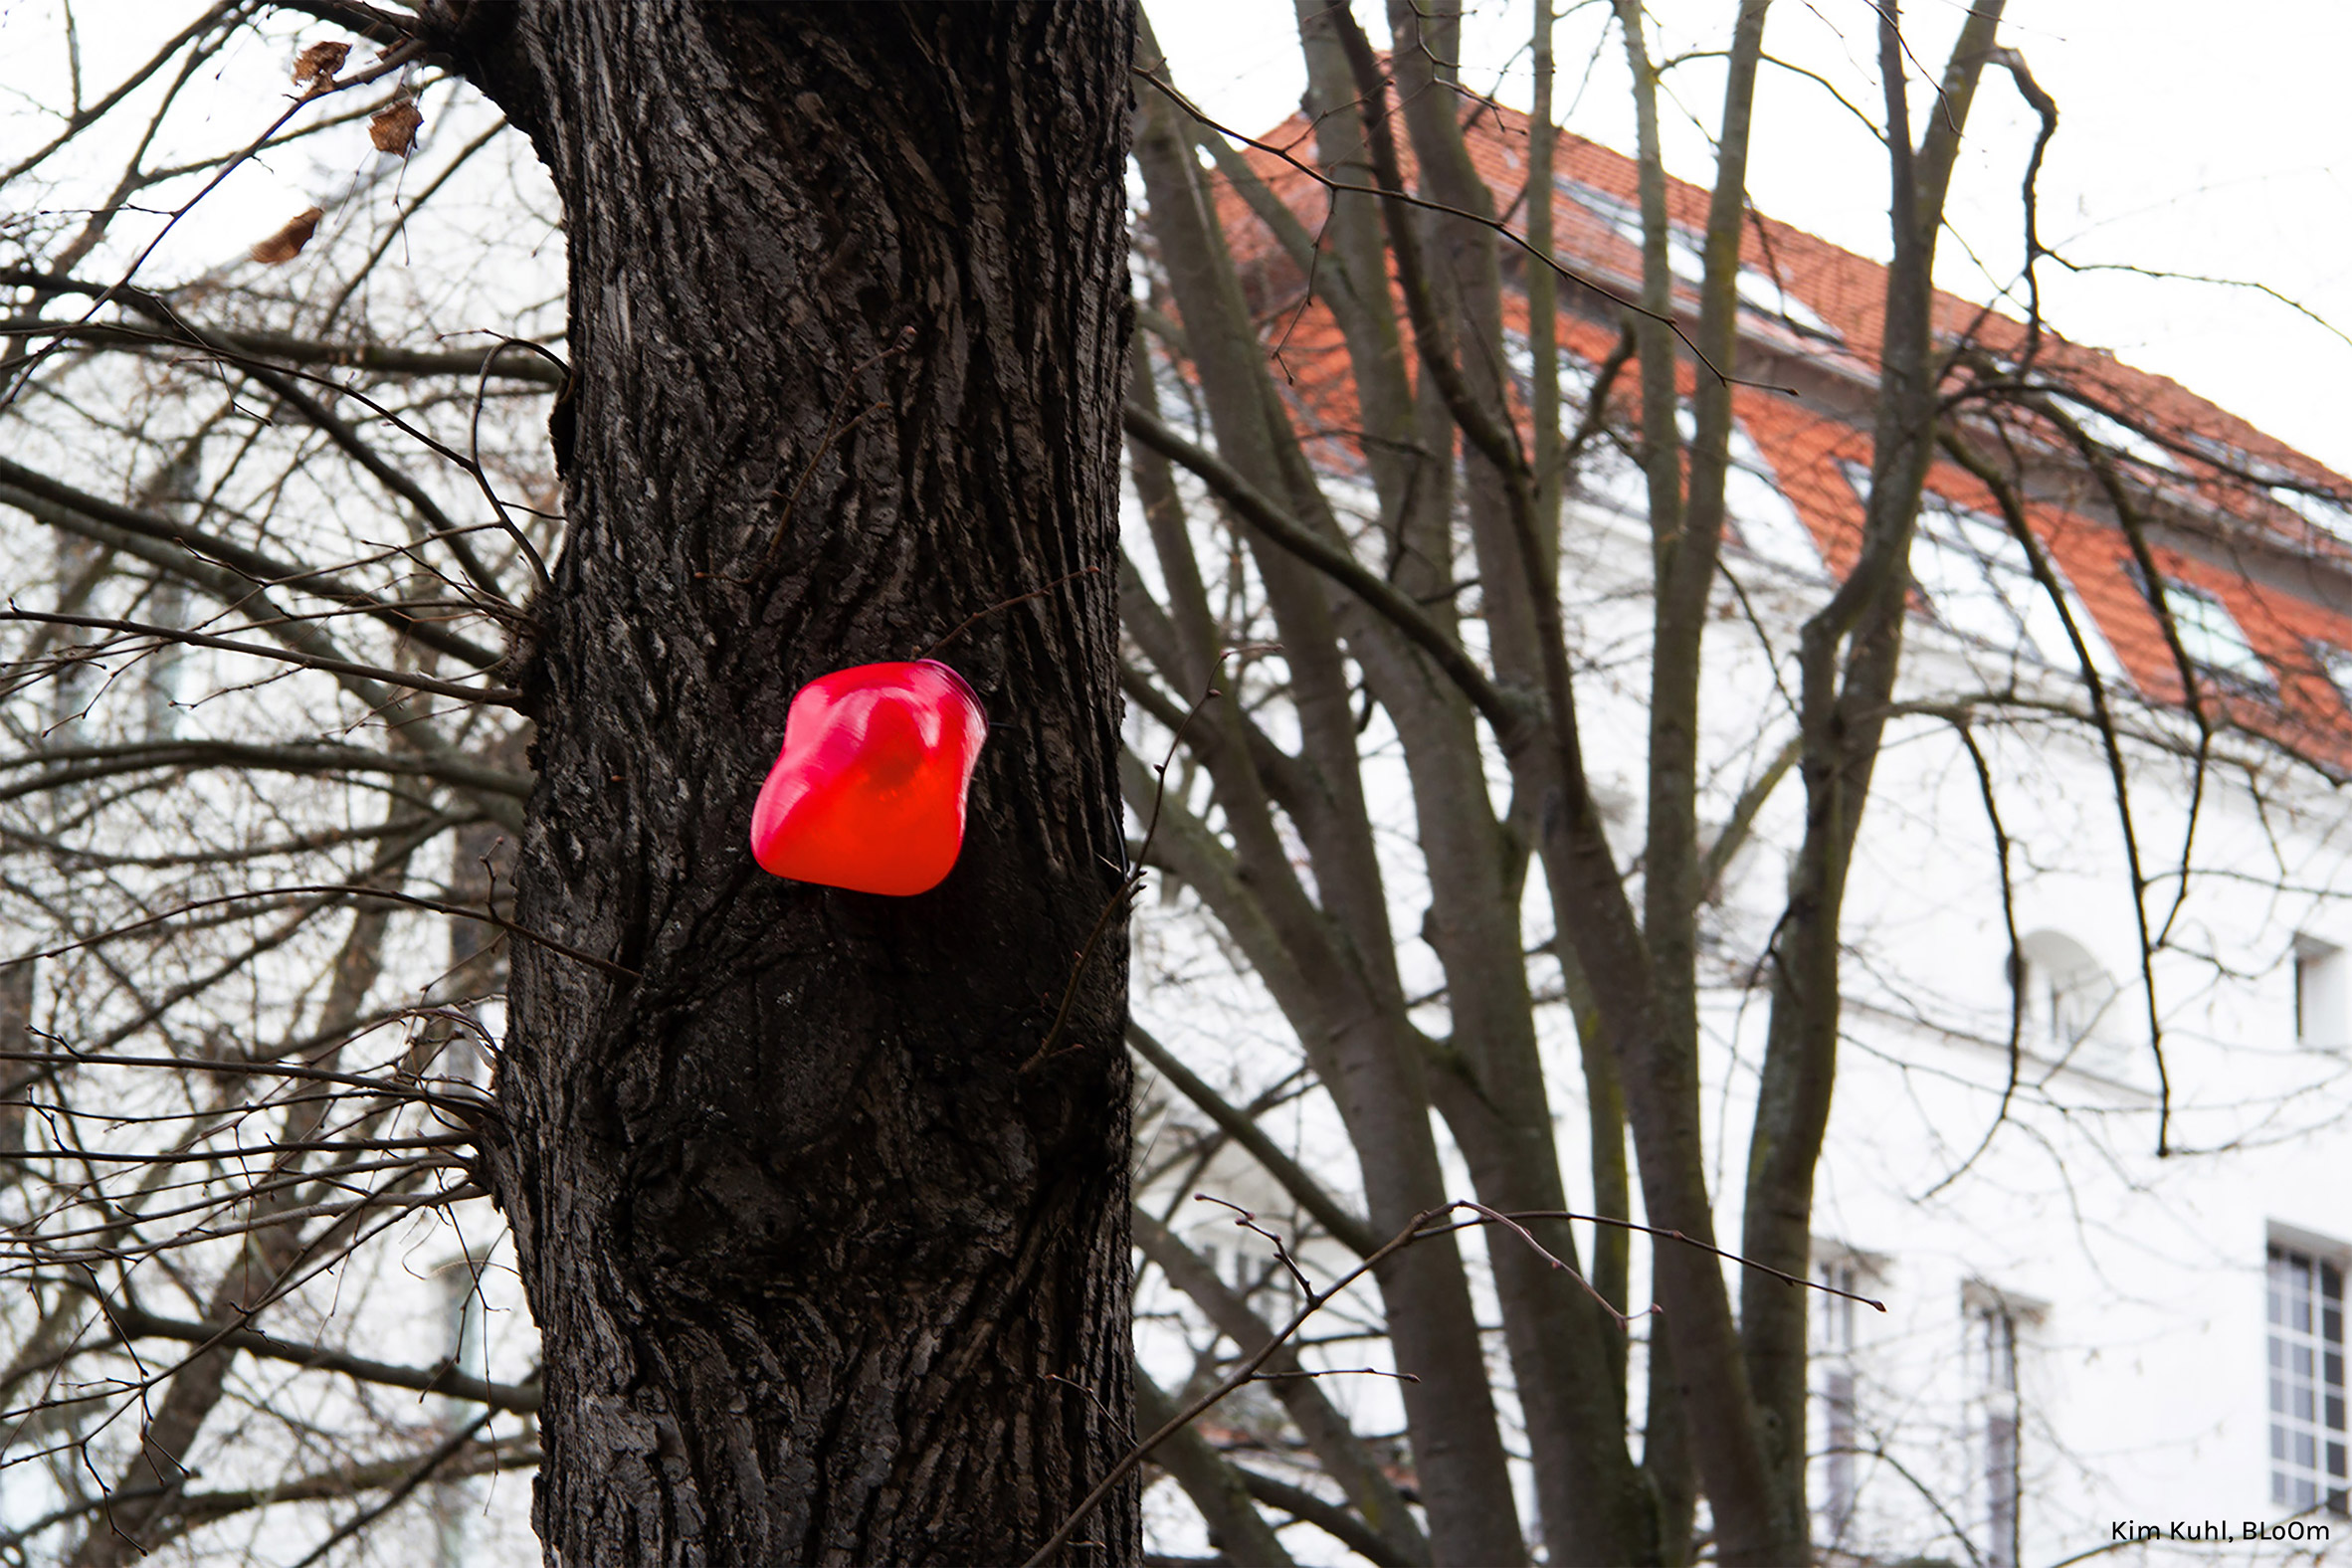 A heart-shaped sensor attached to a tree